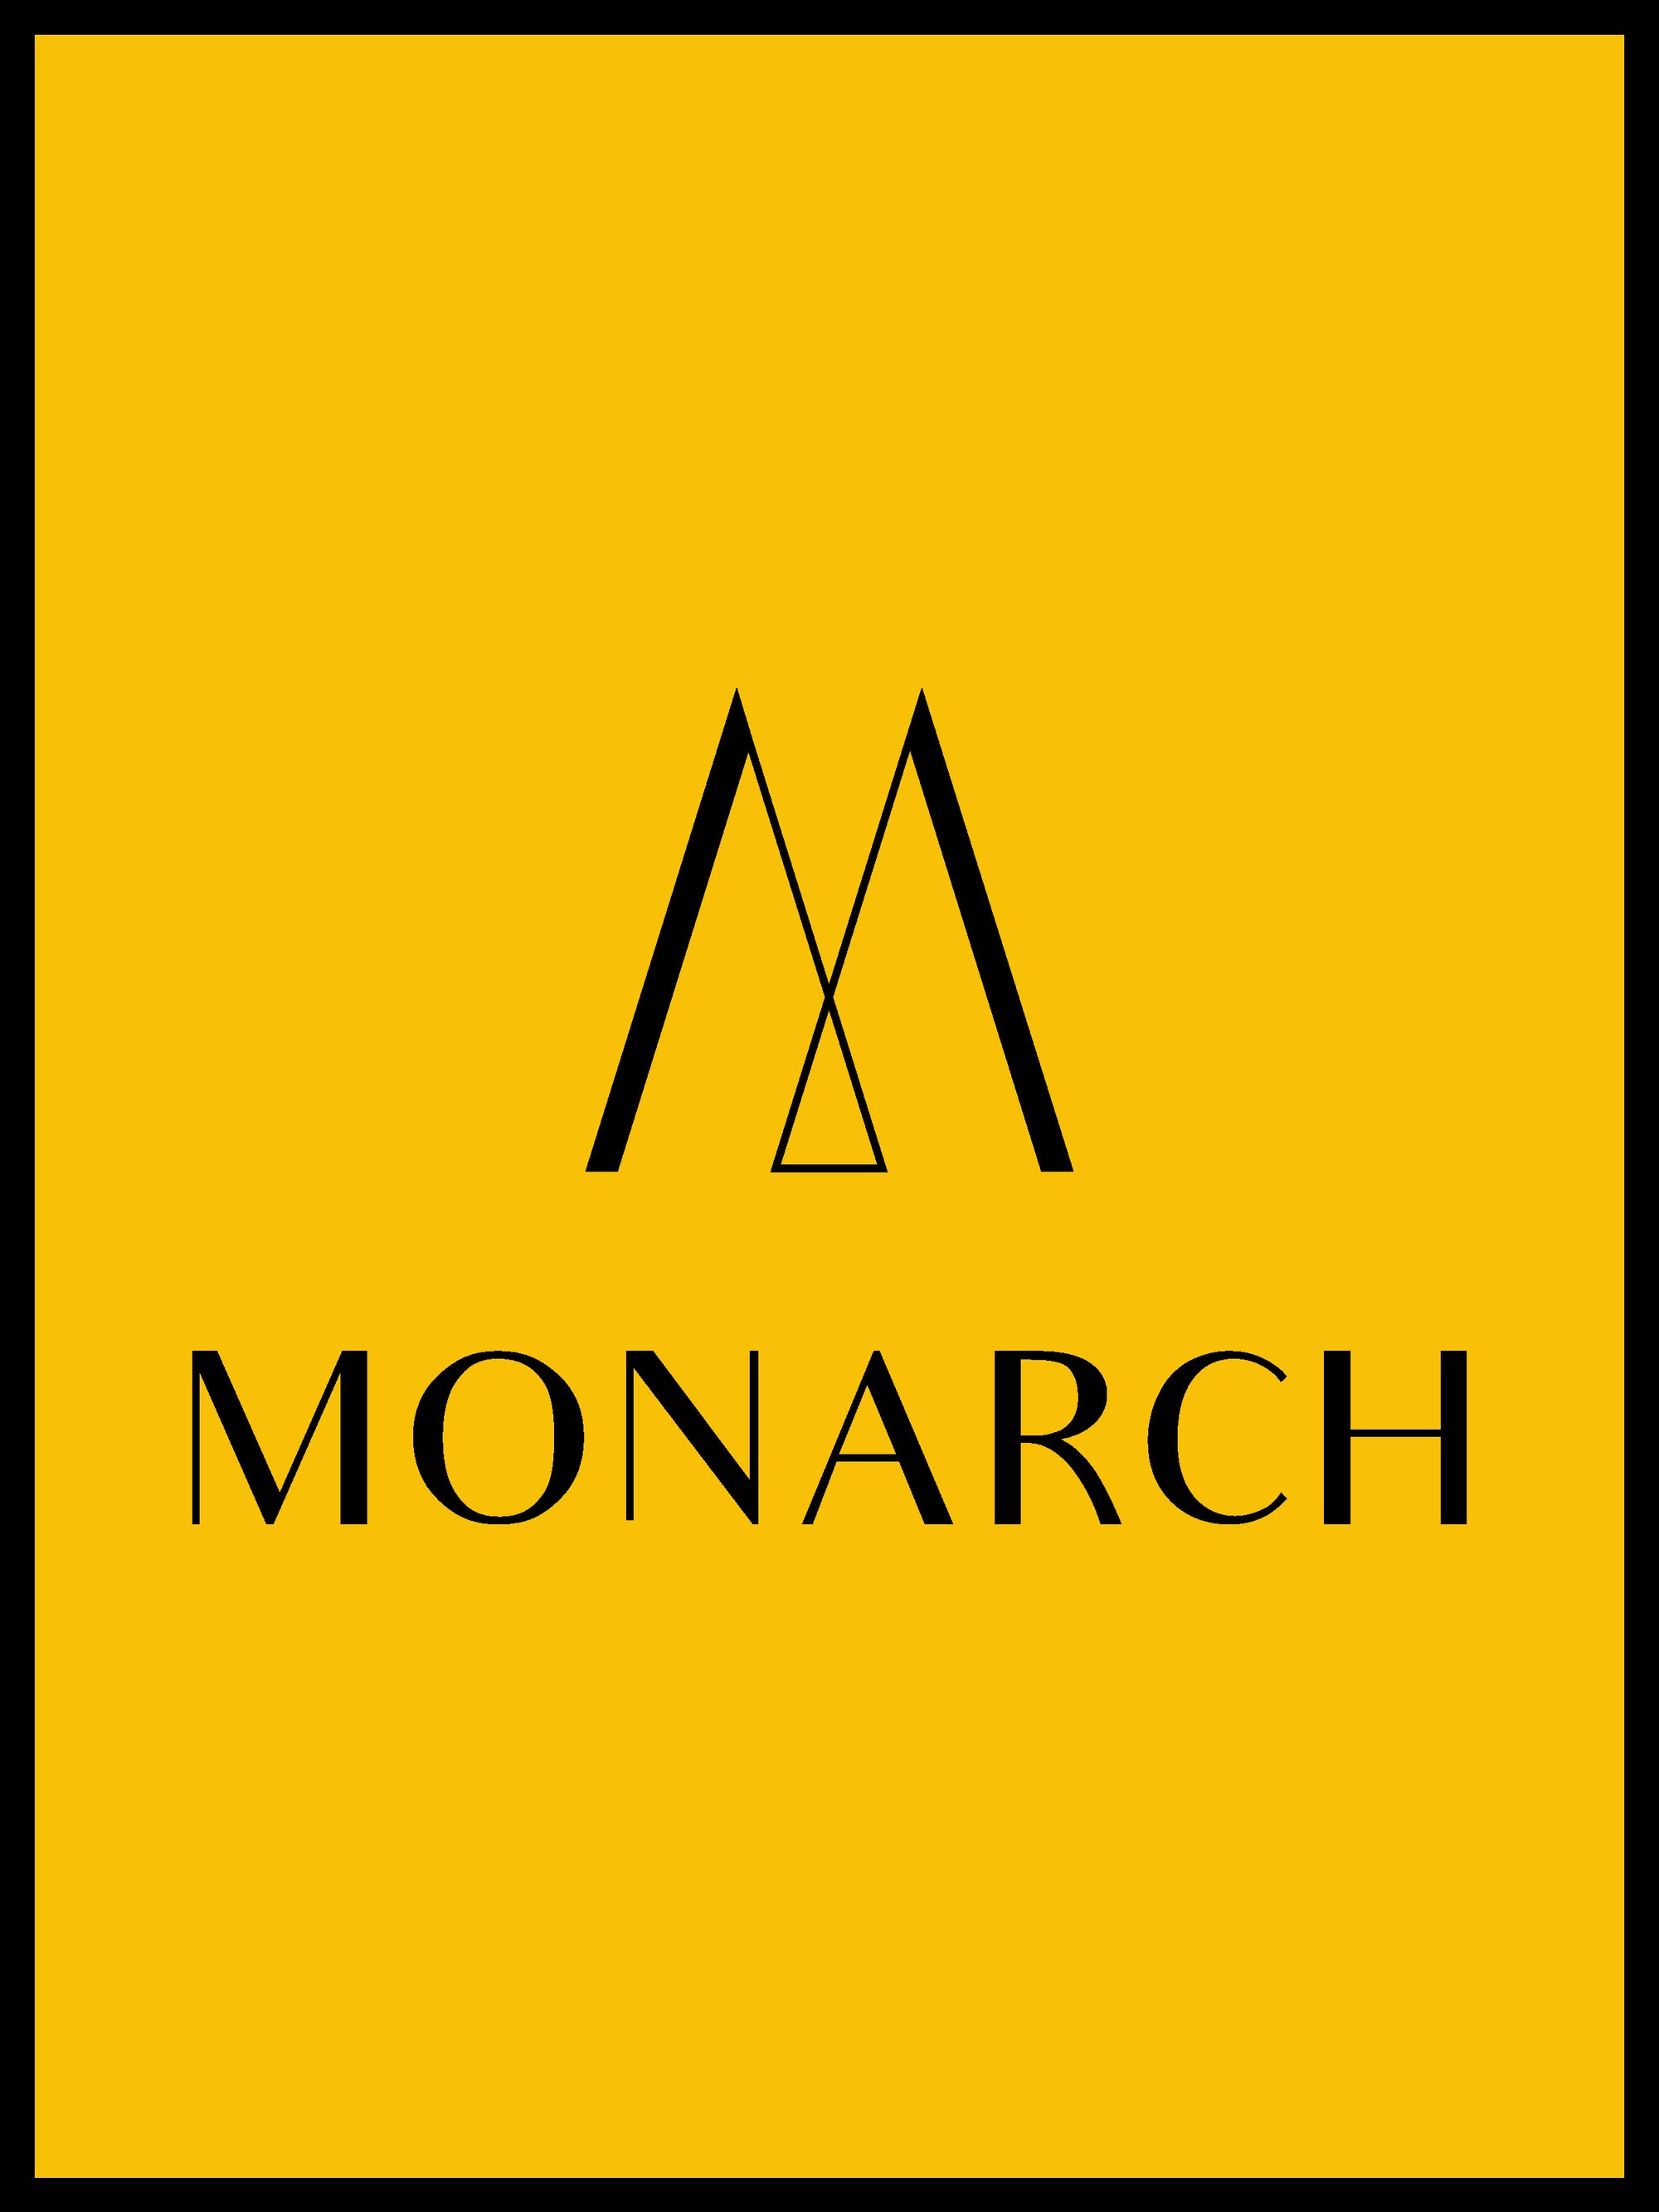 Monarch 6x8 - Gold Background